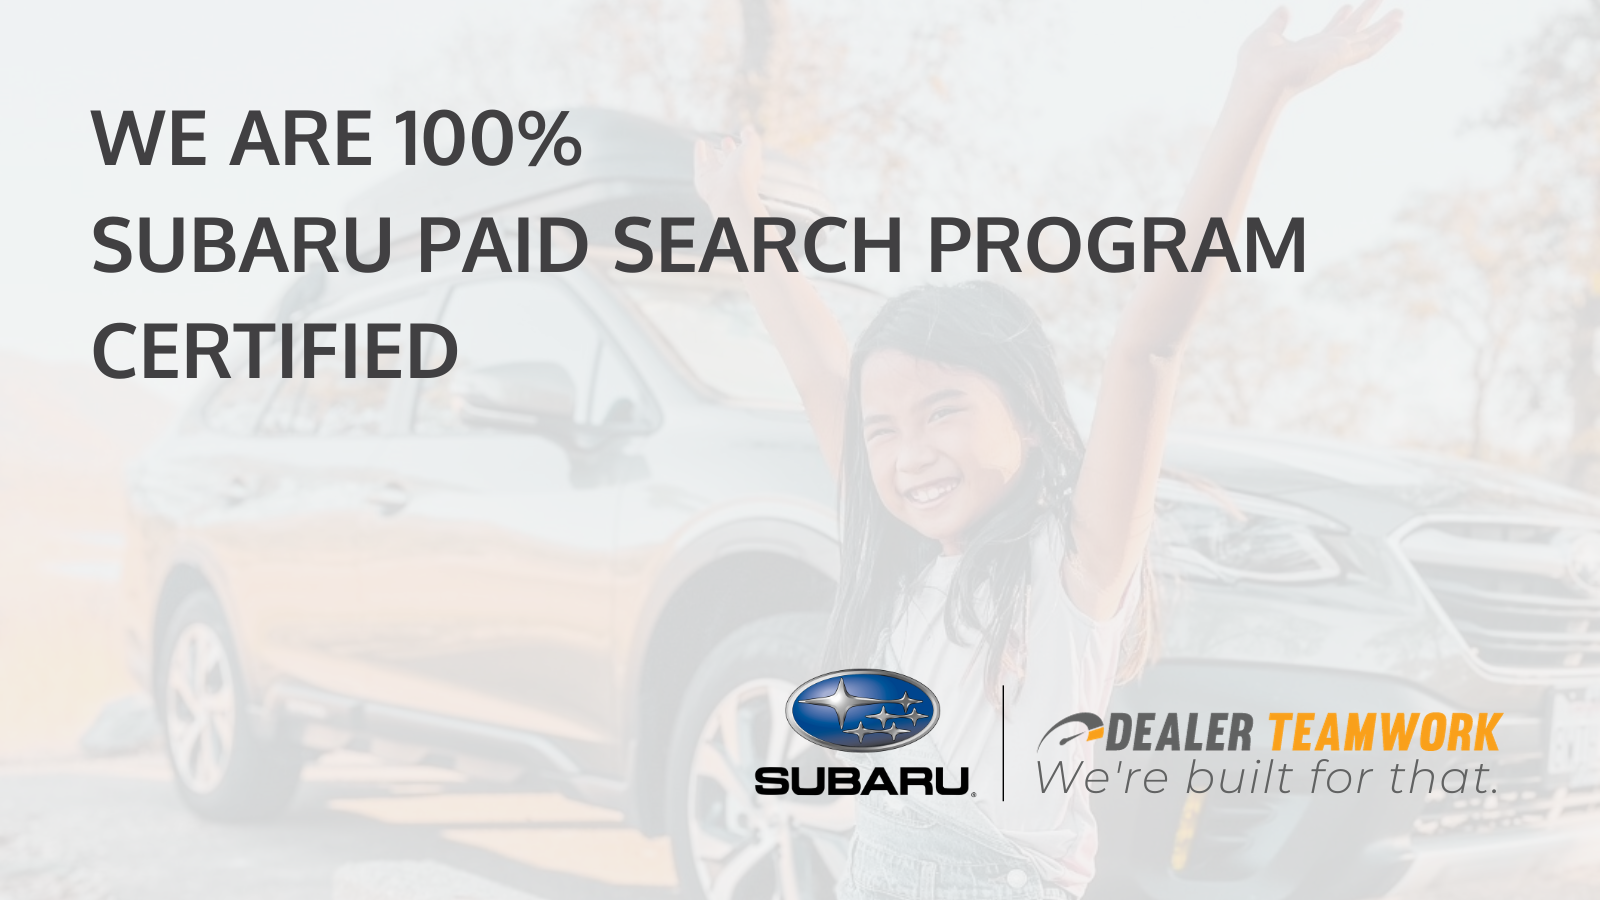 Subaru Certified Paid Search Program NEWS